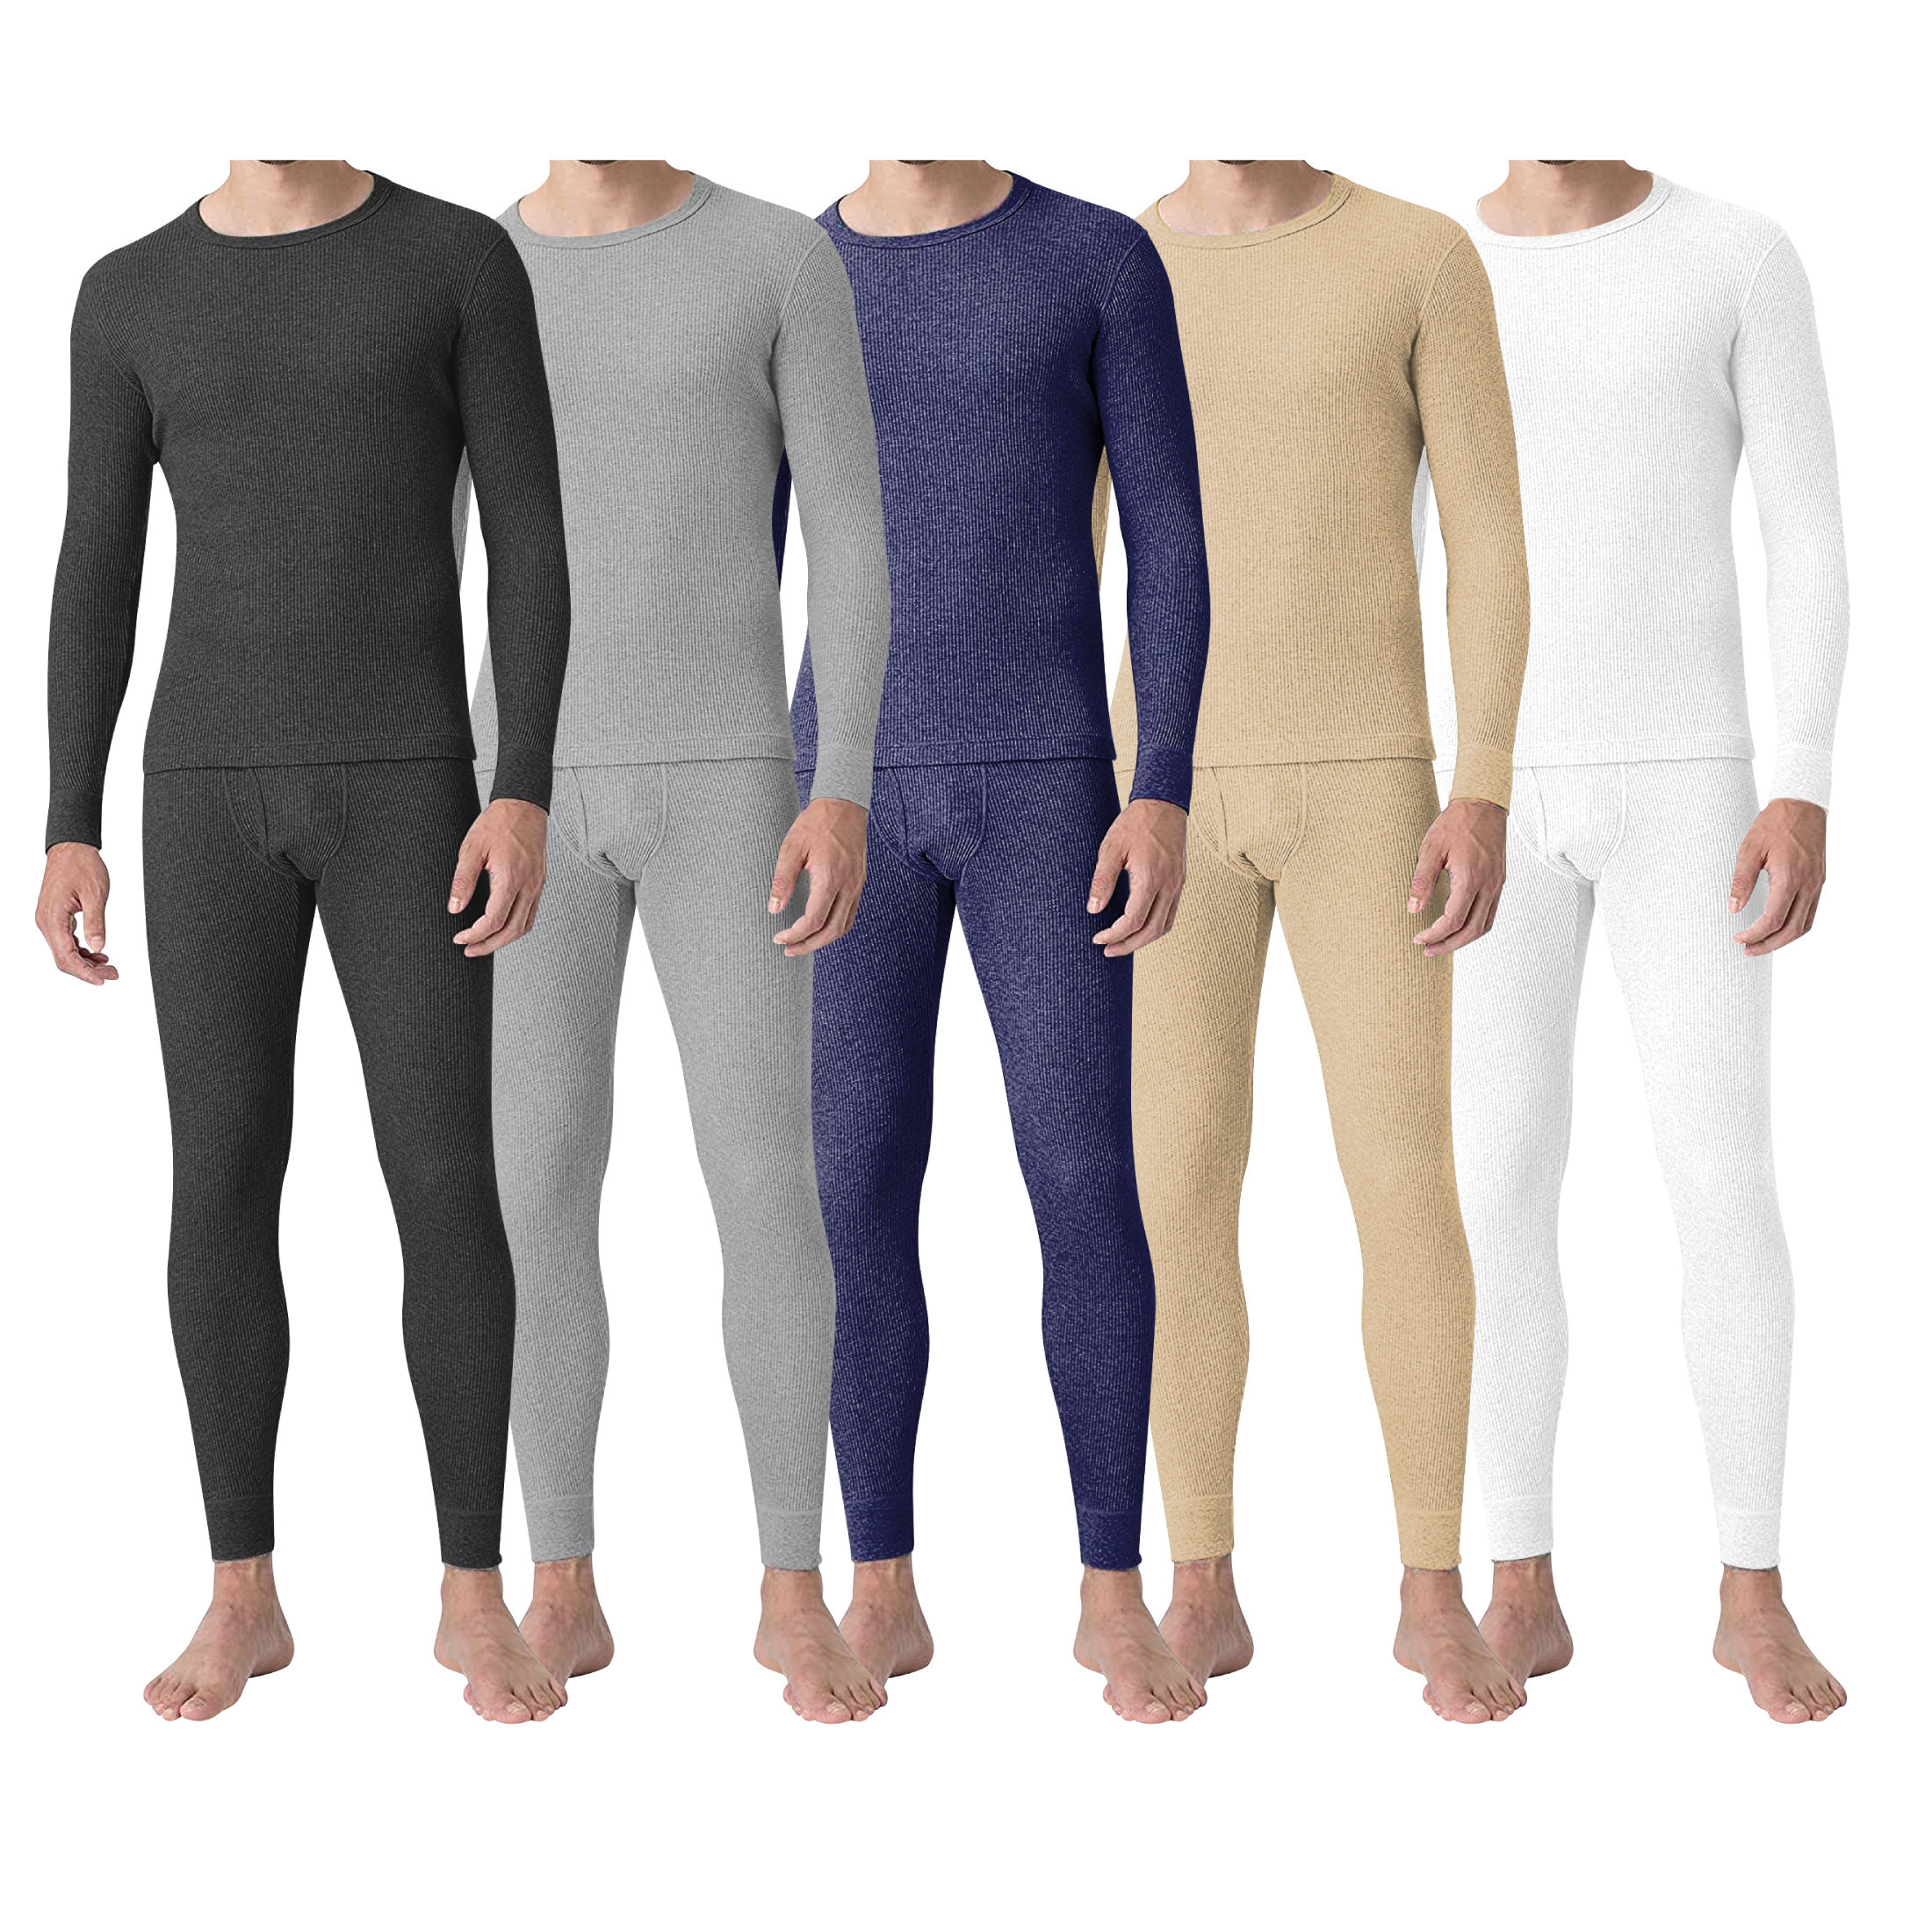 2-Piece: Men's Super Soft Cotton Waffle Knit Winter Thermal Underwear Set - Navy, Large